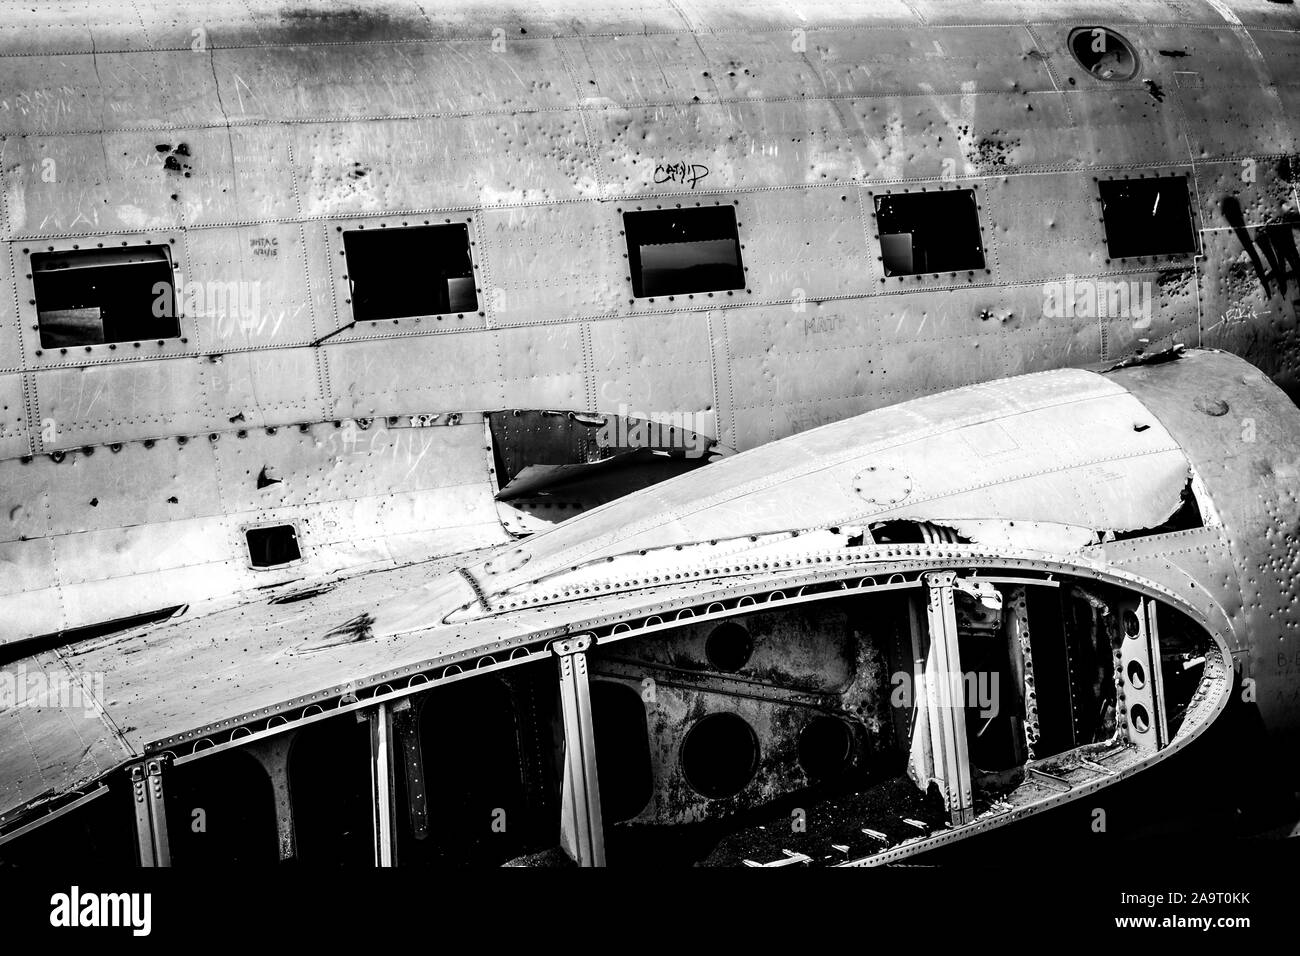 Crash and abandoned DC-3 plane in Iceland Stock Photo